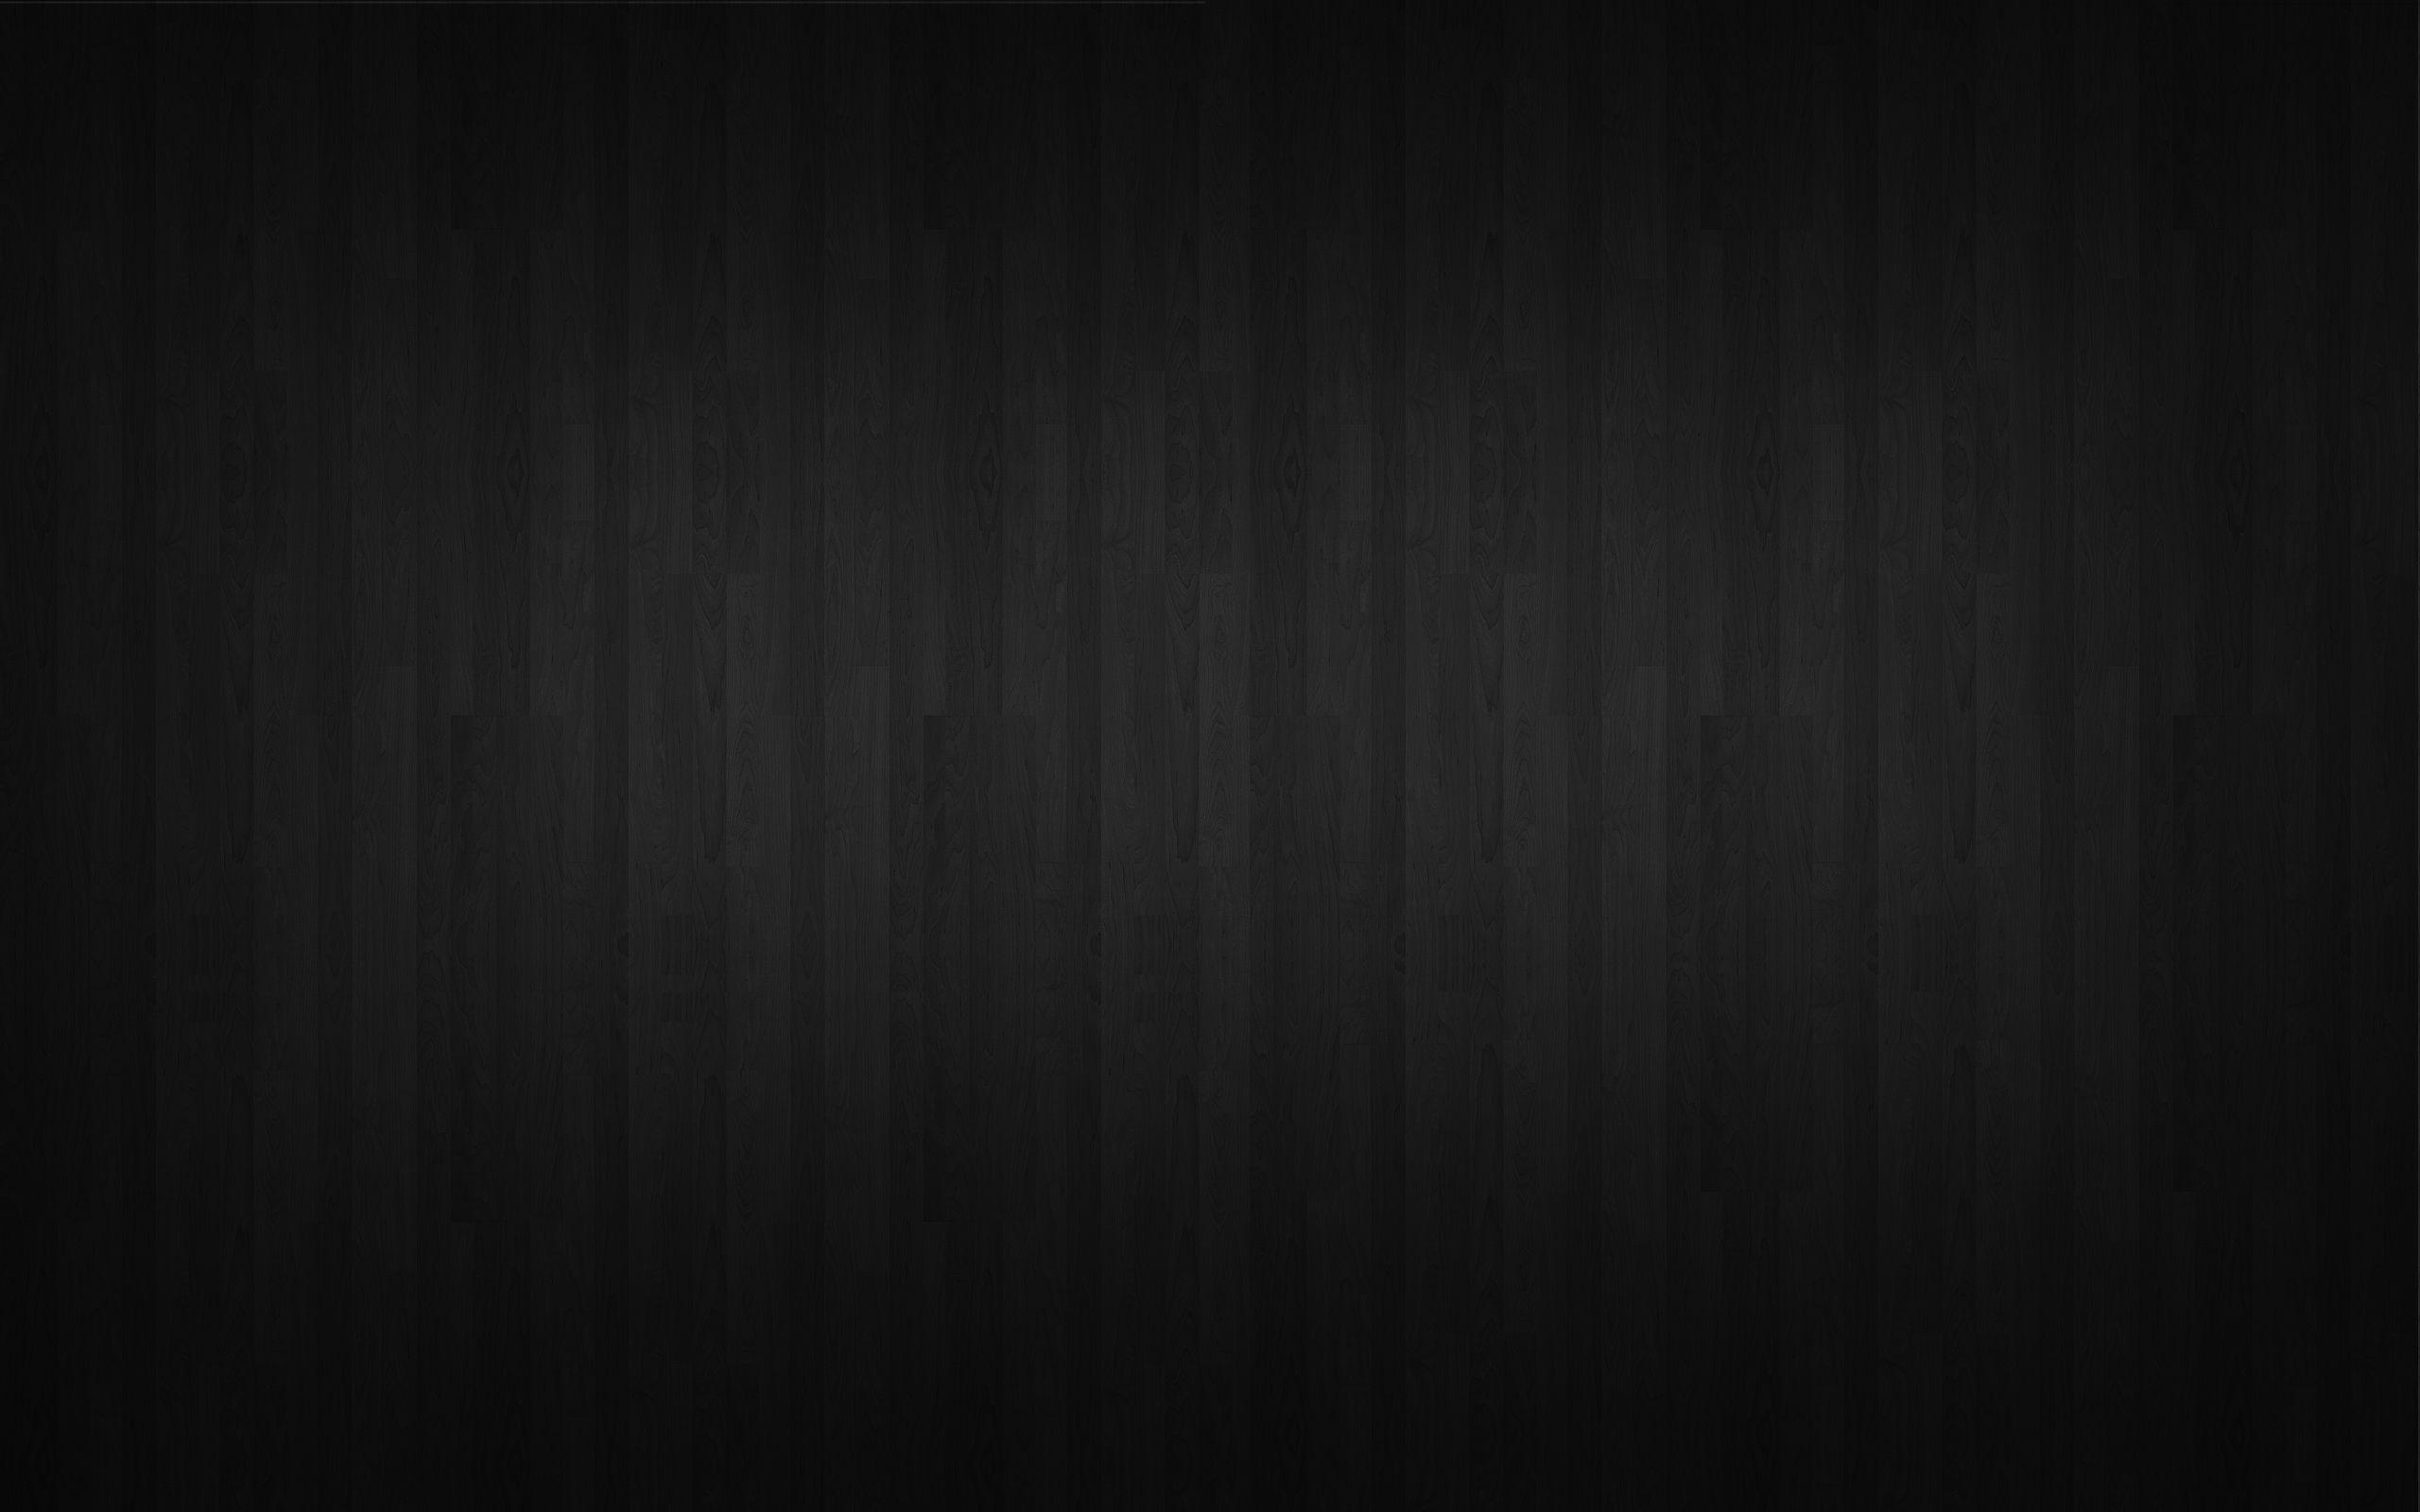 Solid Black 4K Wallpapers - Top Free Solid Black 4K Backgrounds